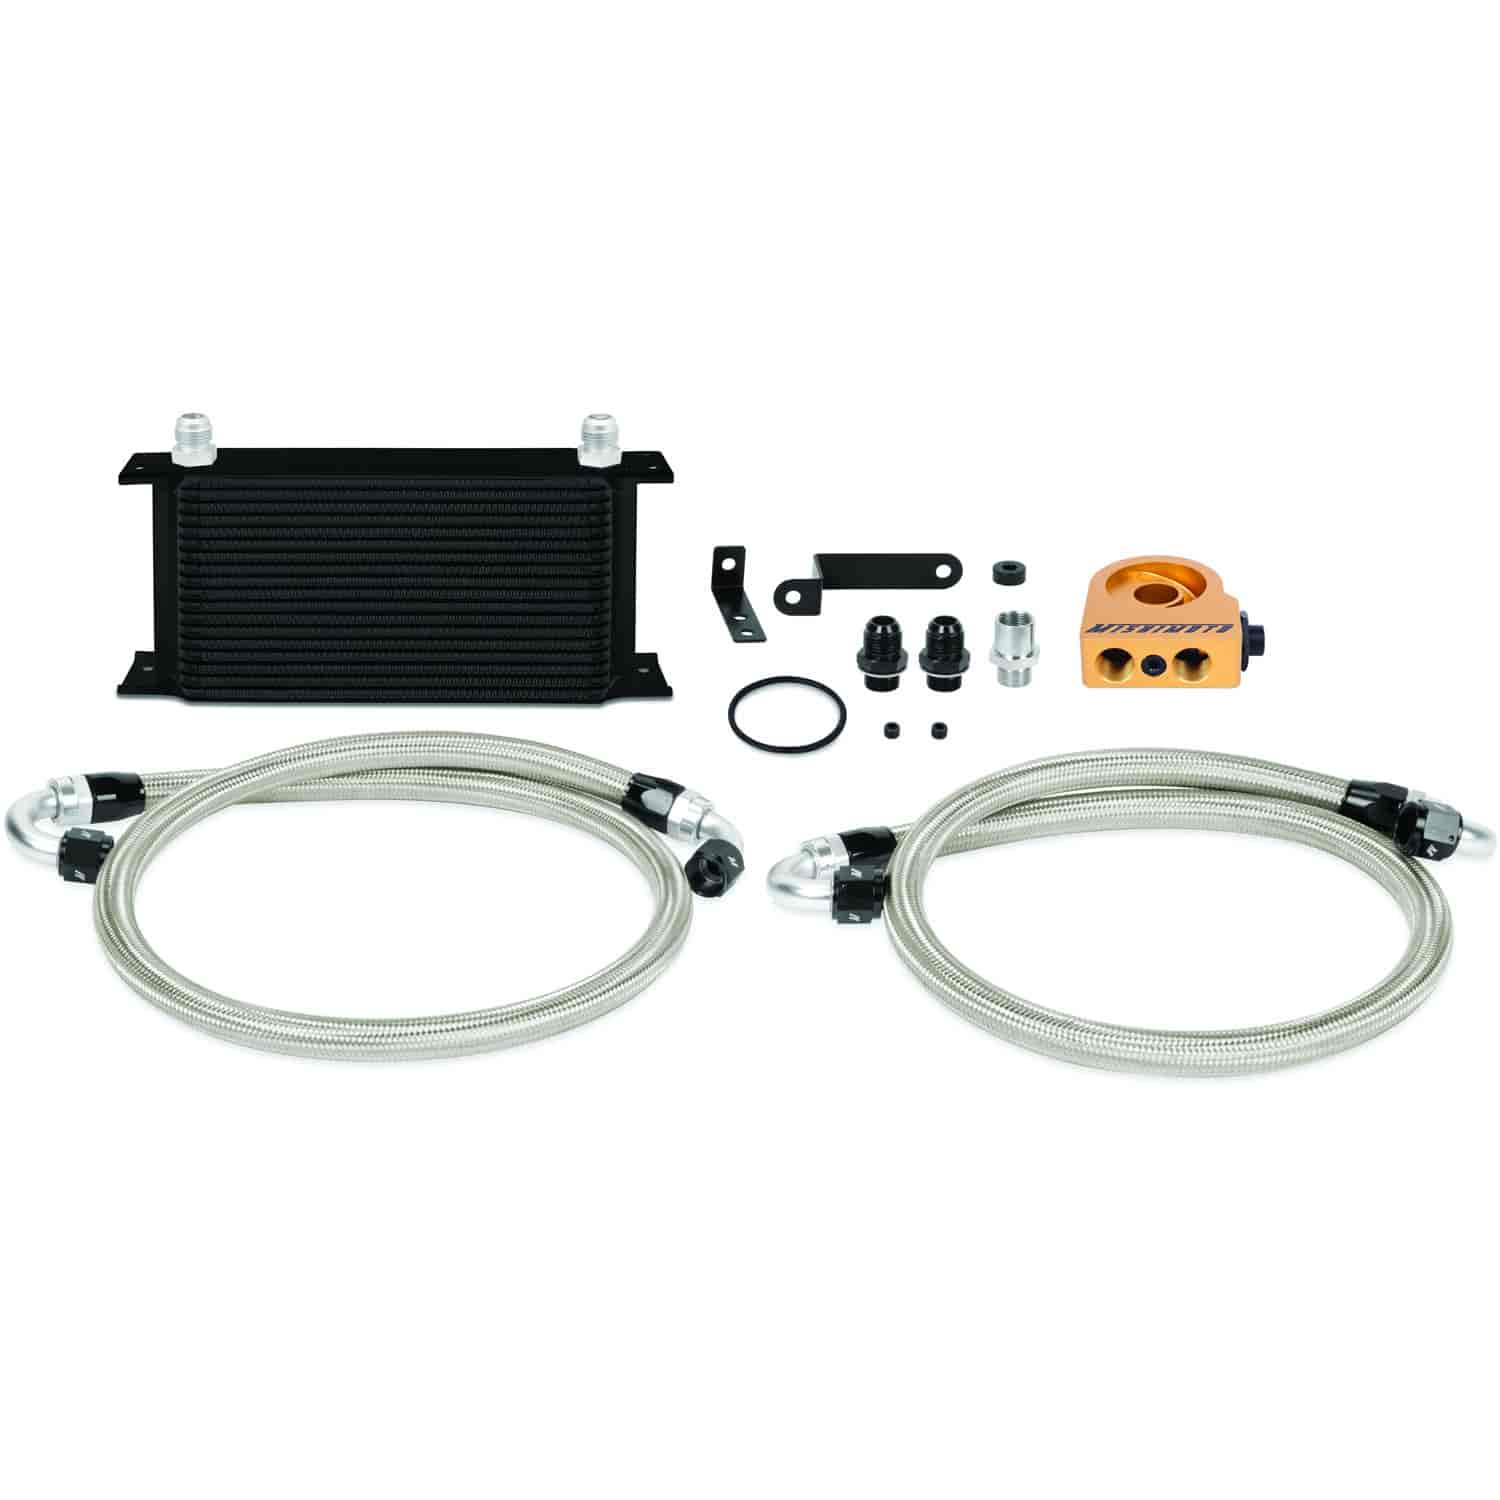 Subaru WRX STI Thermostatic Oil Cooler Kit Black - MFG Part No. MMOC-STI-08TBK